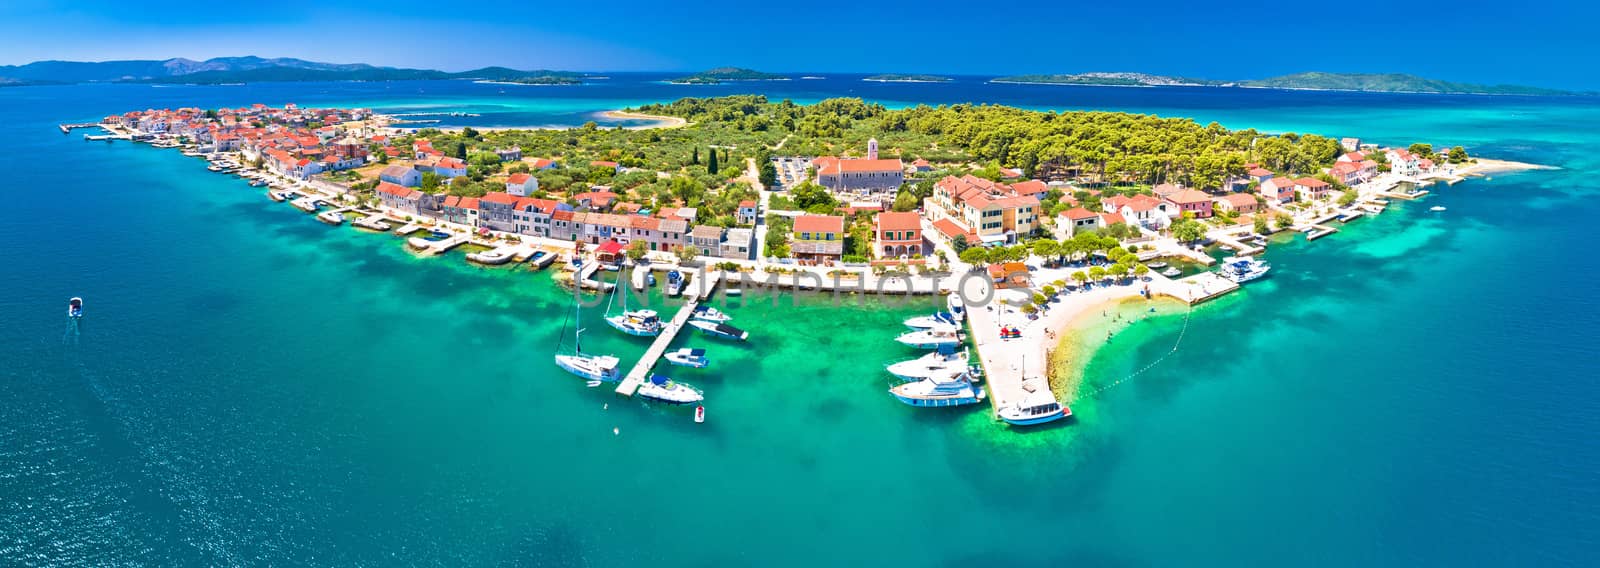 Colorful archipelago of Krapanj island aerial panoramic view, sea sponge harvesting village, Sibenik archipelago of Croatia